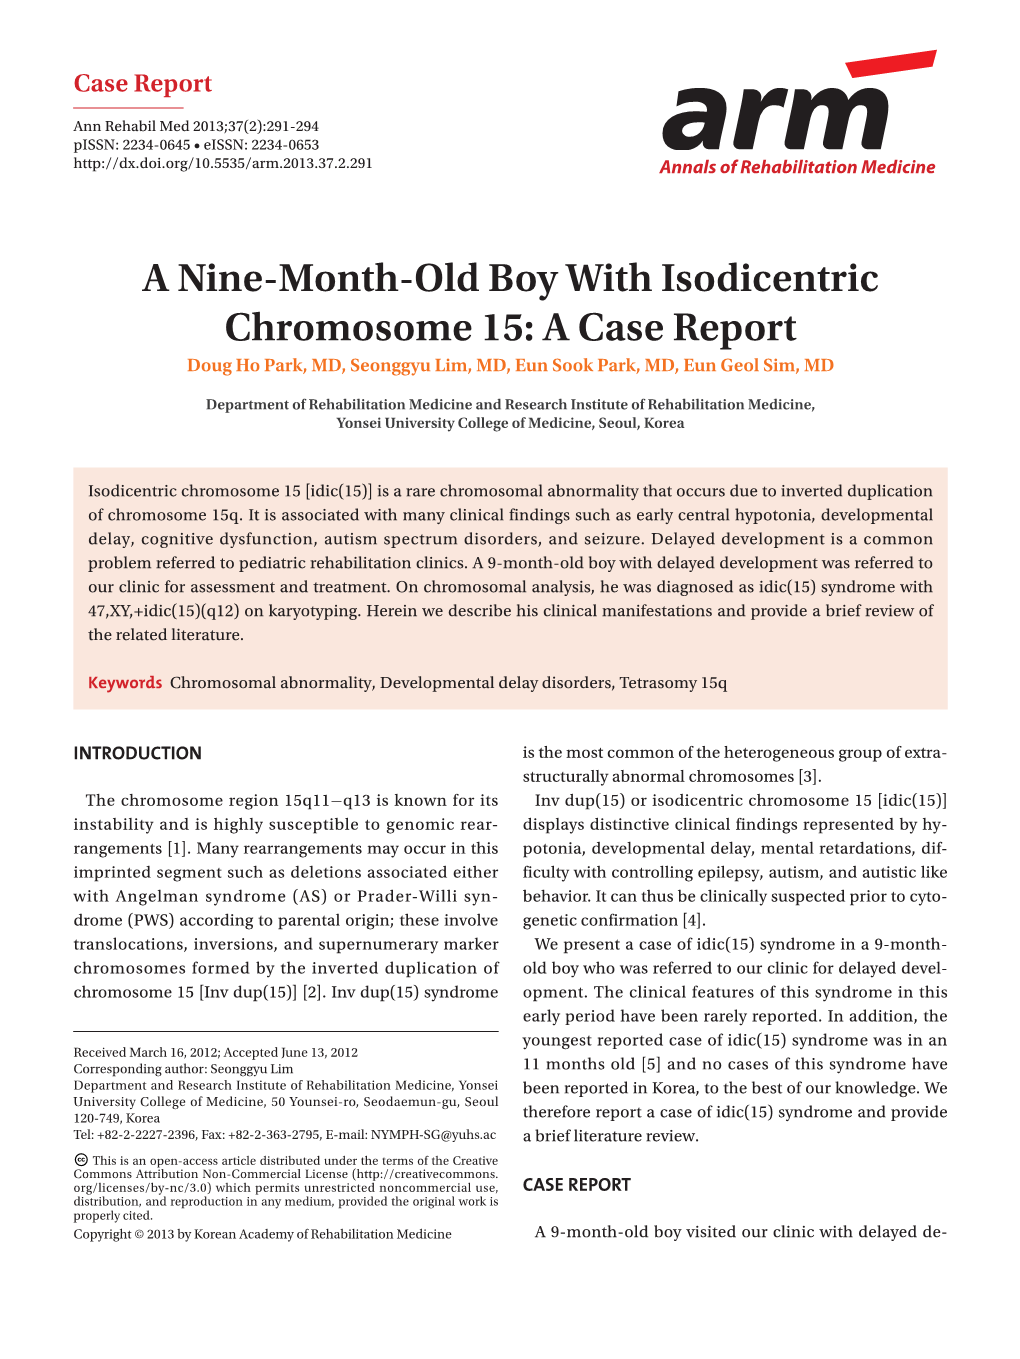 A Nine-Month-Old Boy with Isodicentric Chromosome 15: a Case Report Doug Ho Park, MD, Seonggyu Lim, MD, Eun Sook Park, MD, Eun Geol Sim, MD